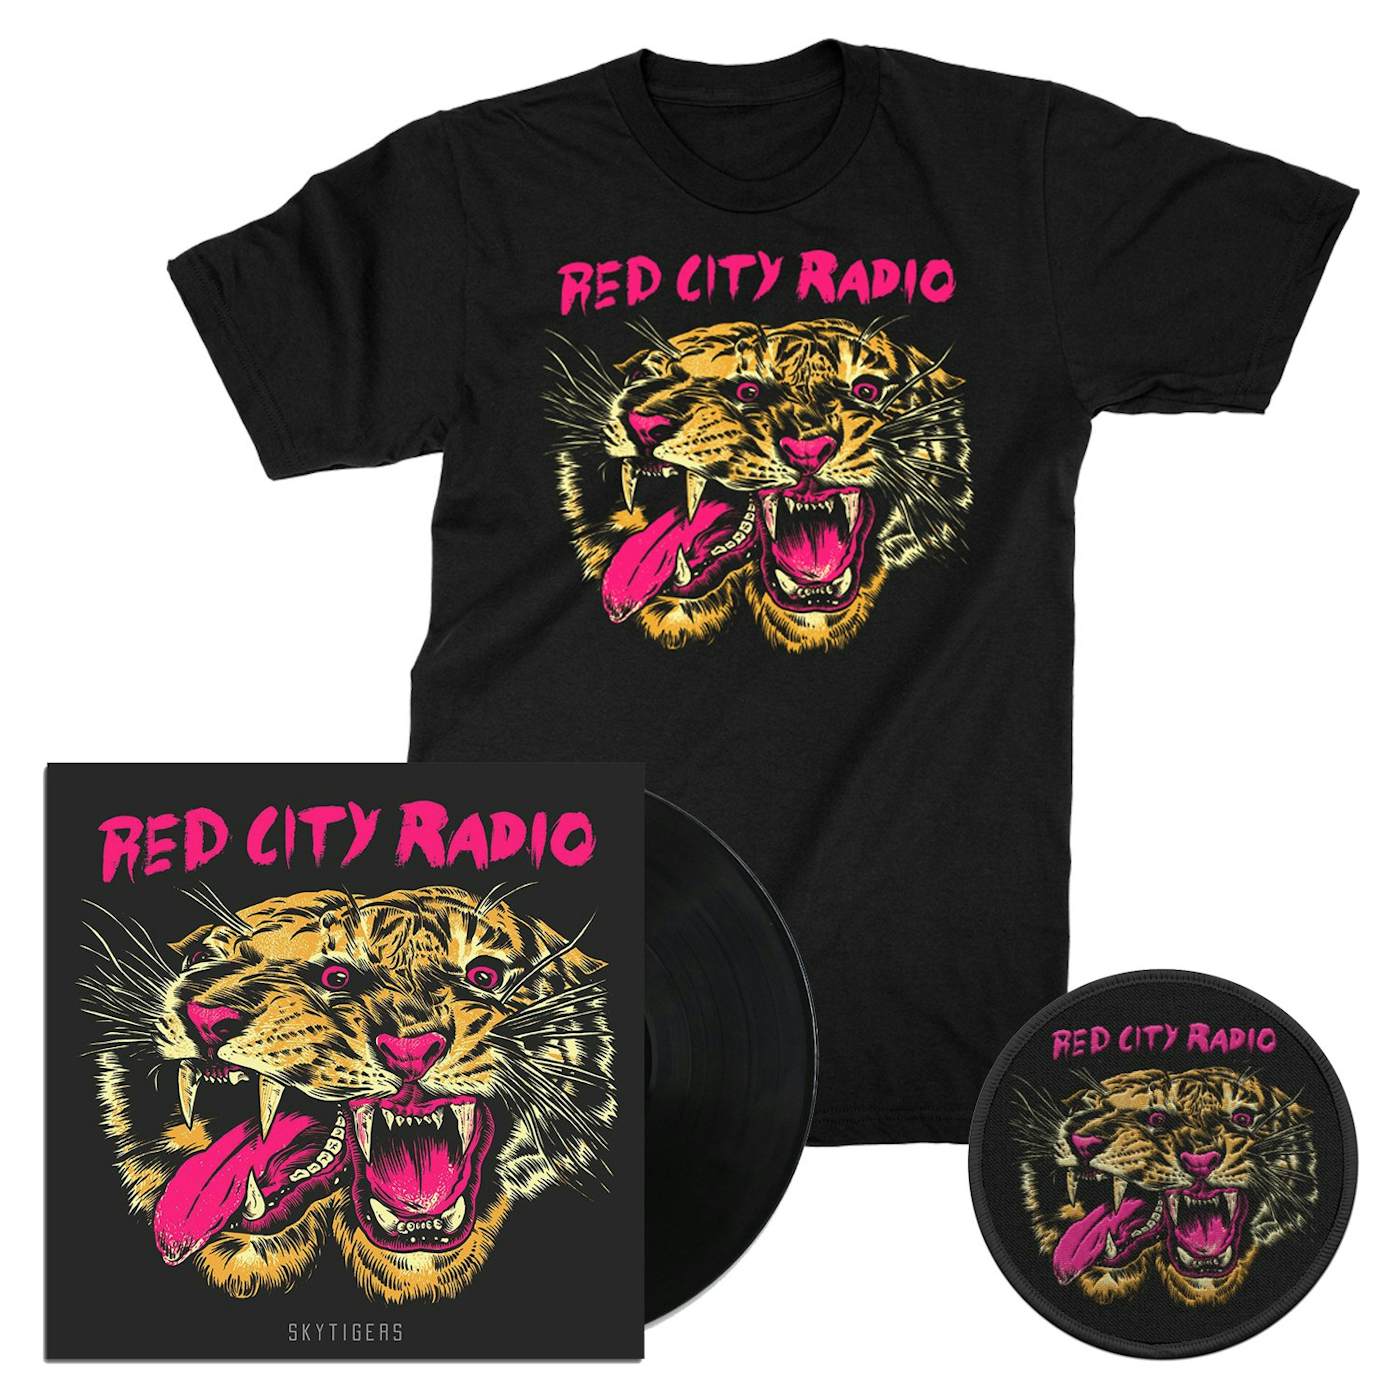 Red City Radio Sky Tigers EP Vinyl (Black) + Tee + Patch